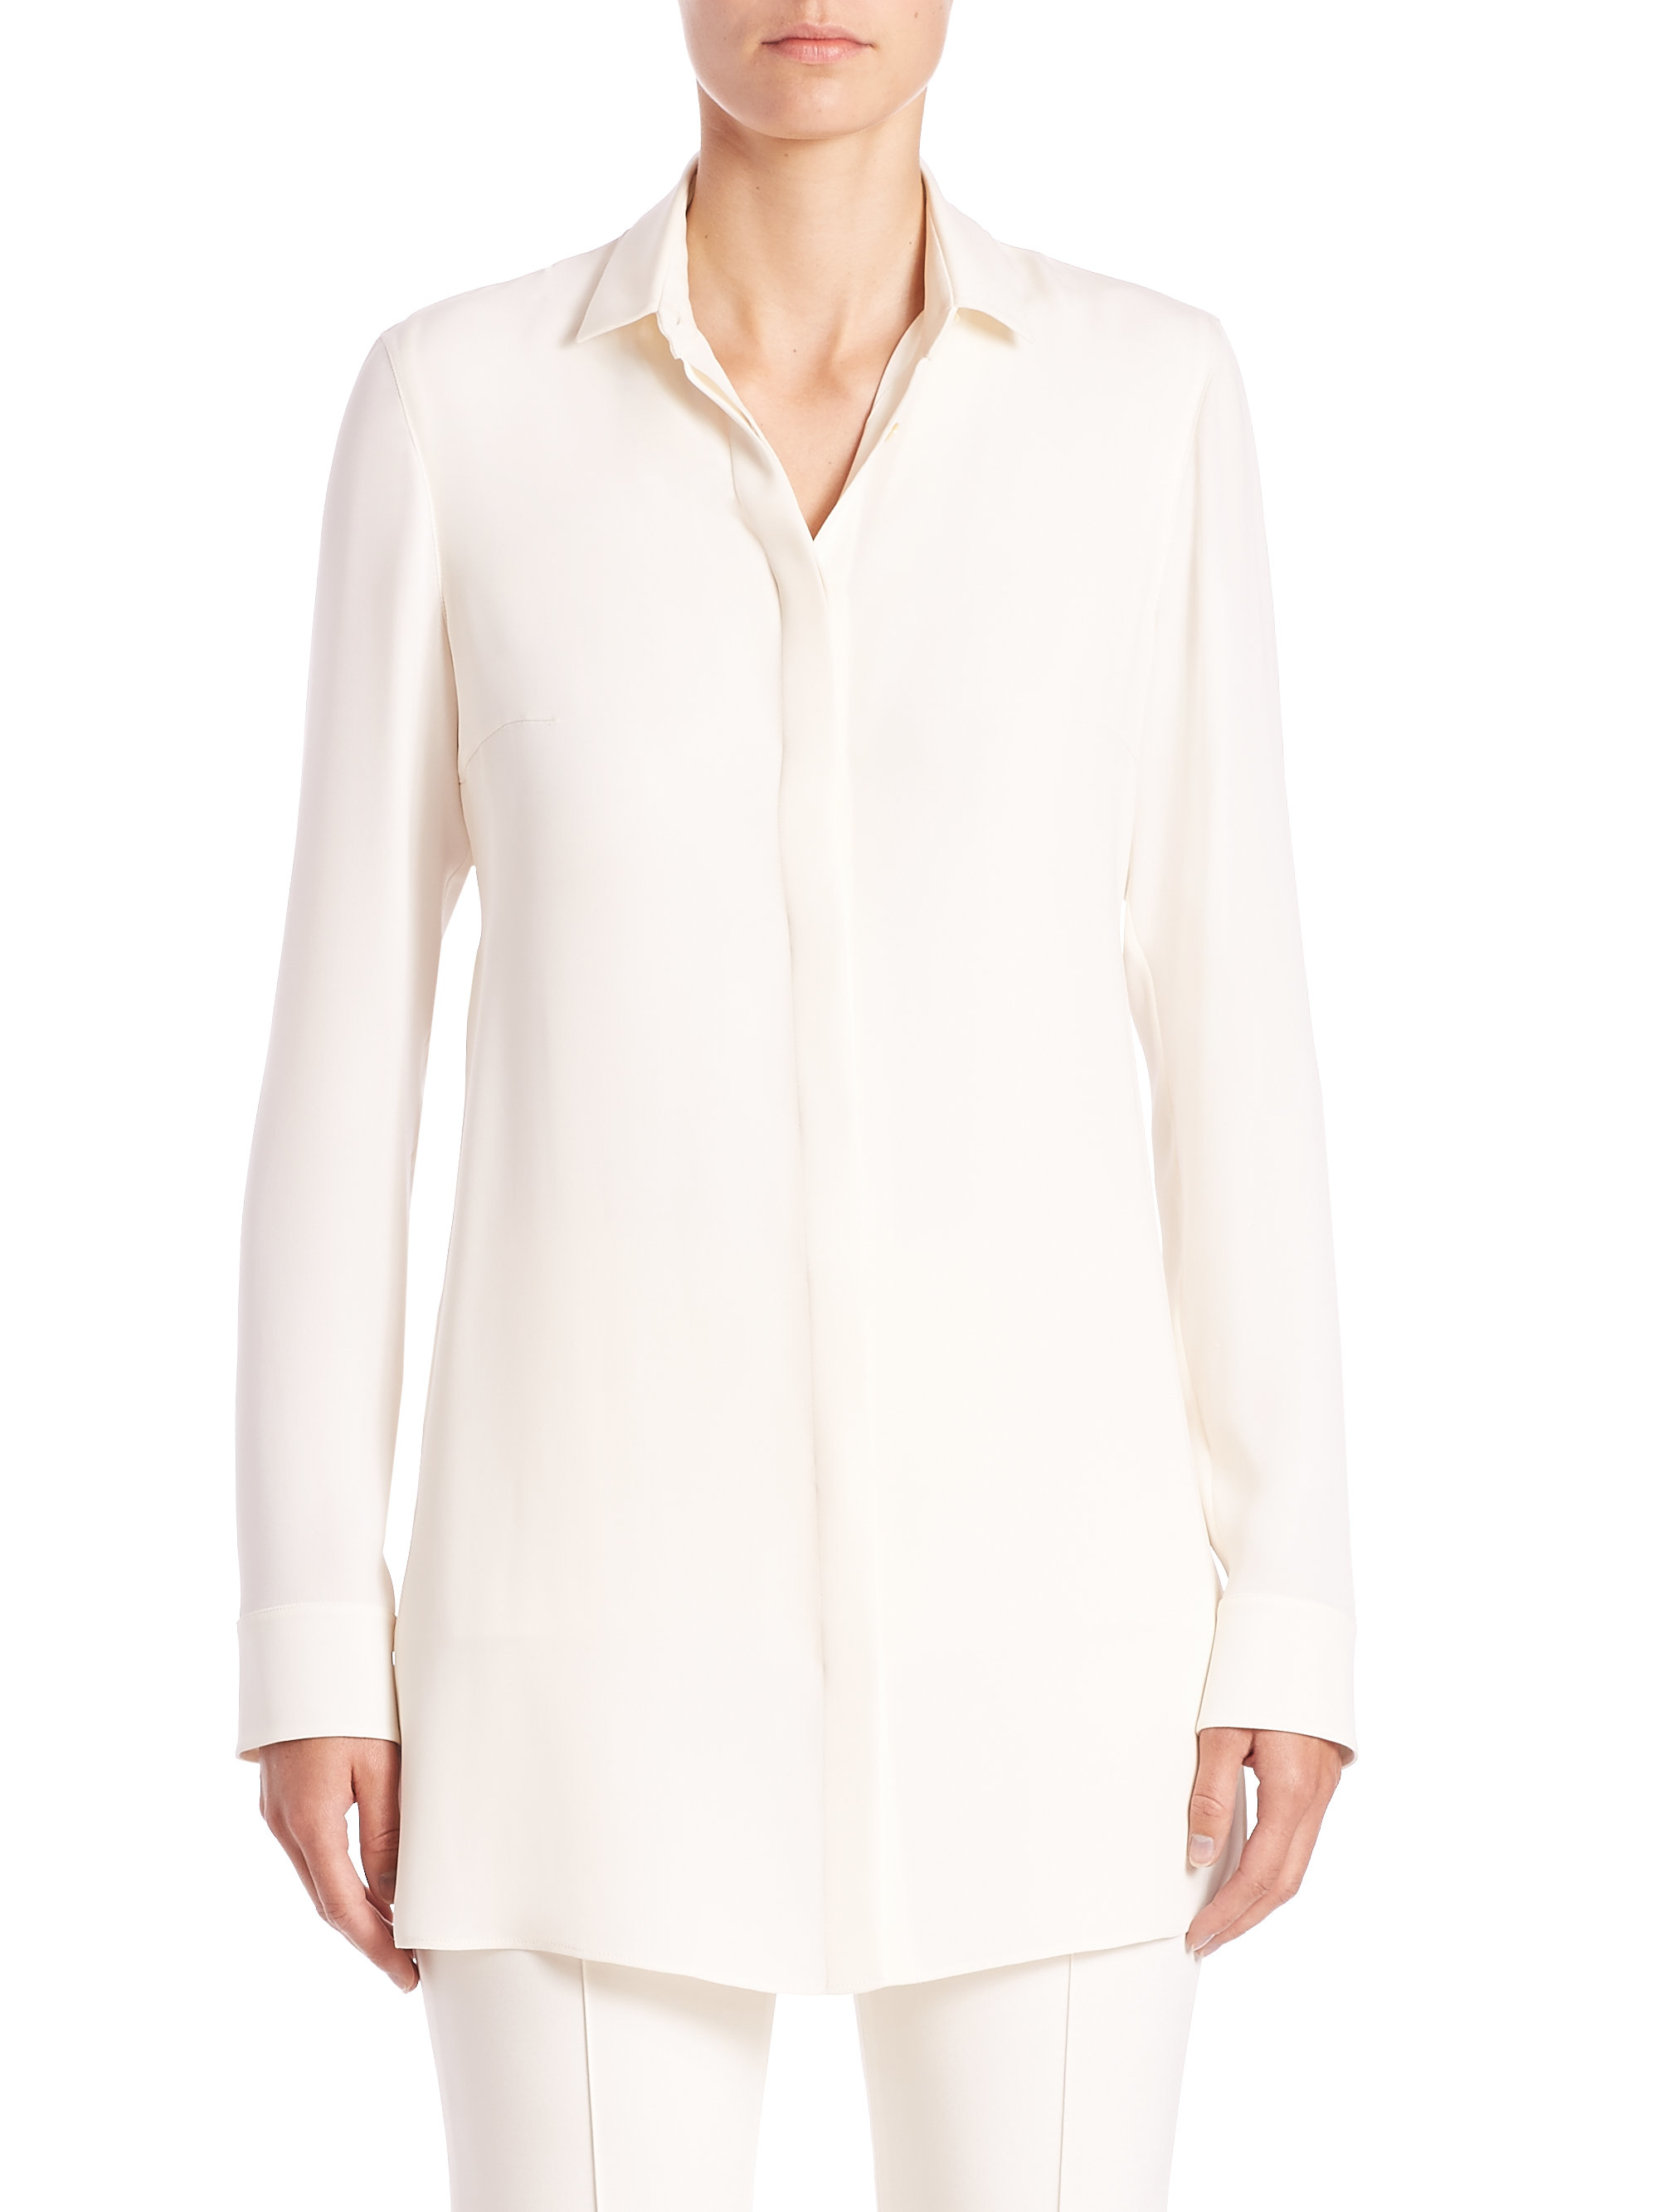 Lyst - Akris Long Silk Tunic Blouse in White